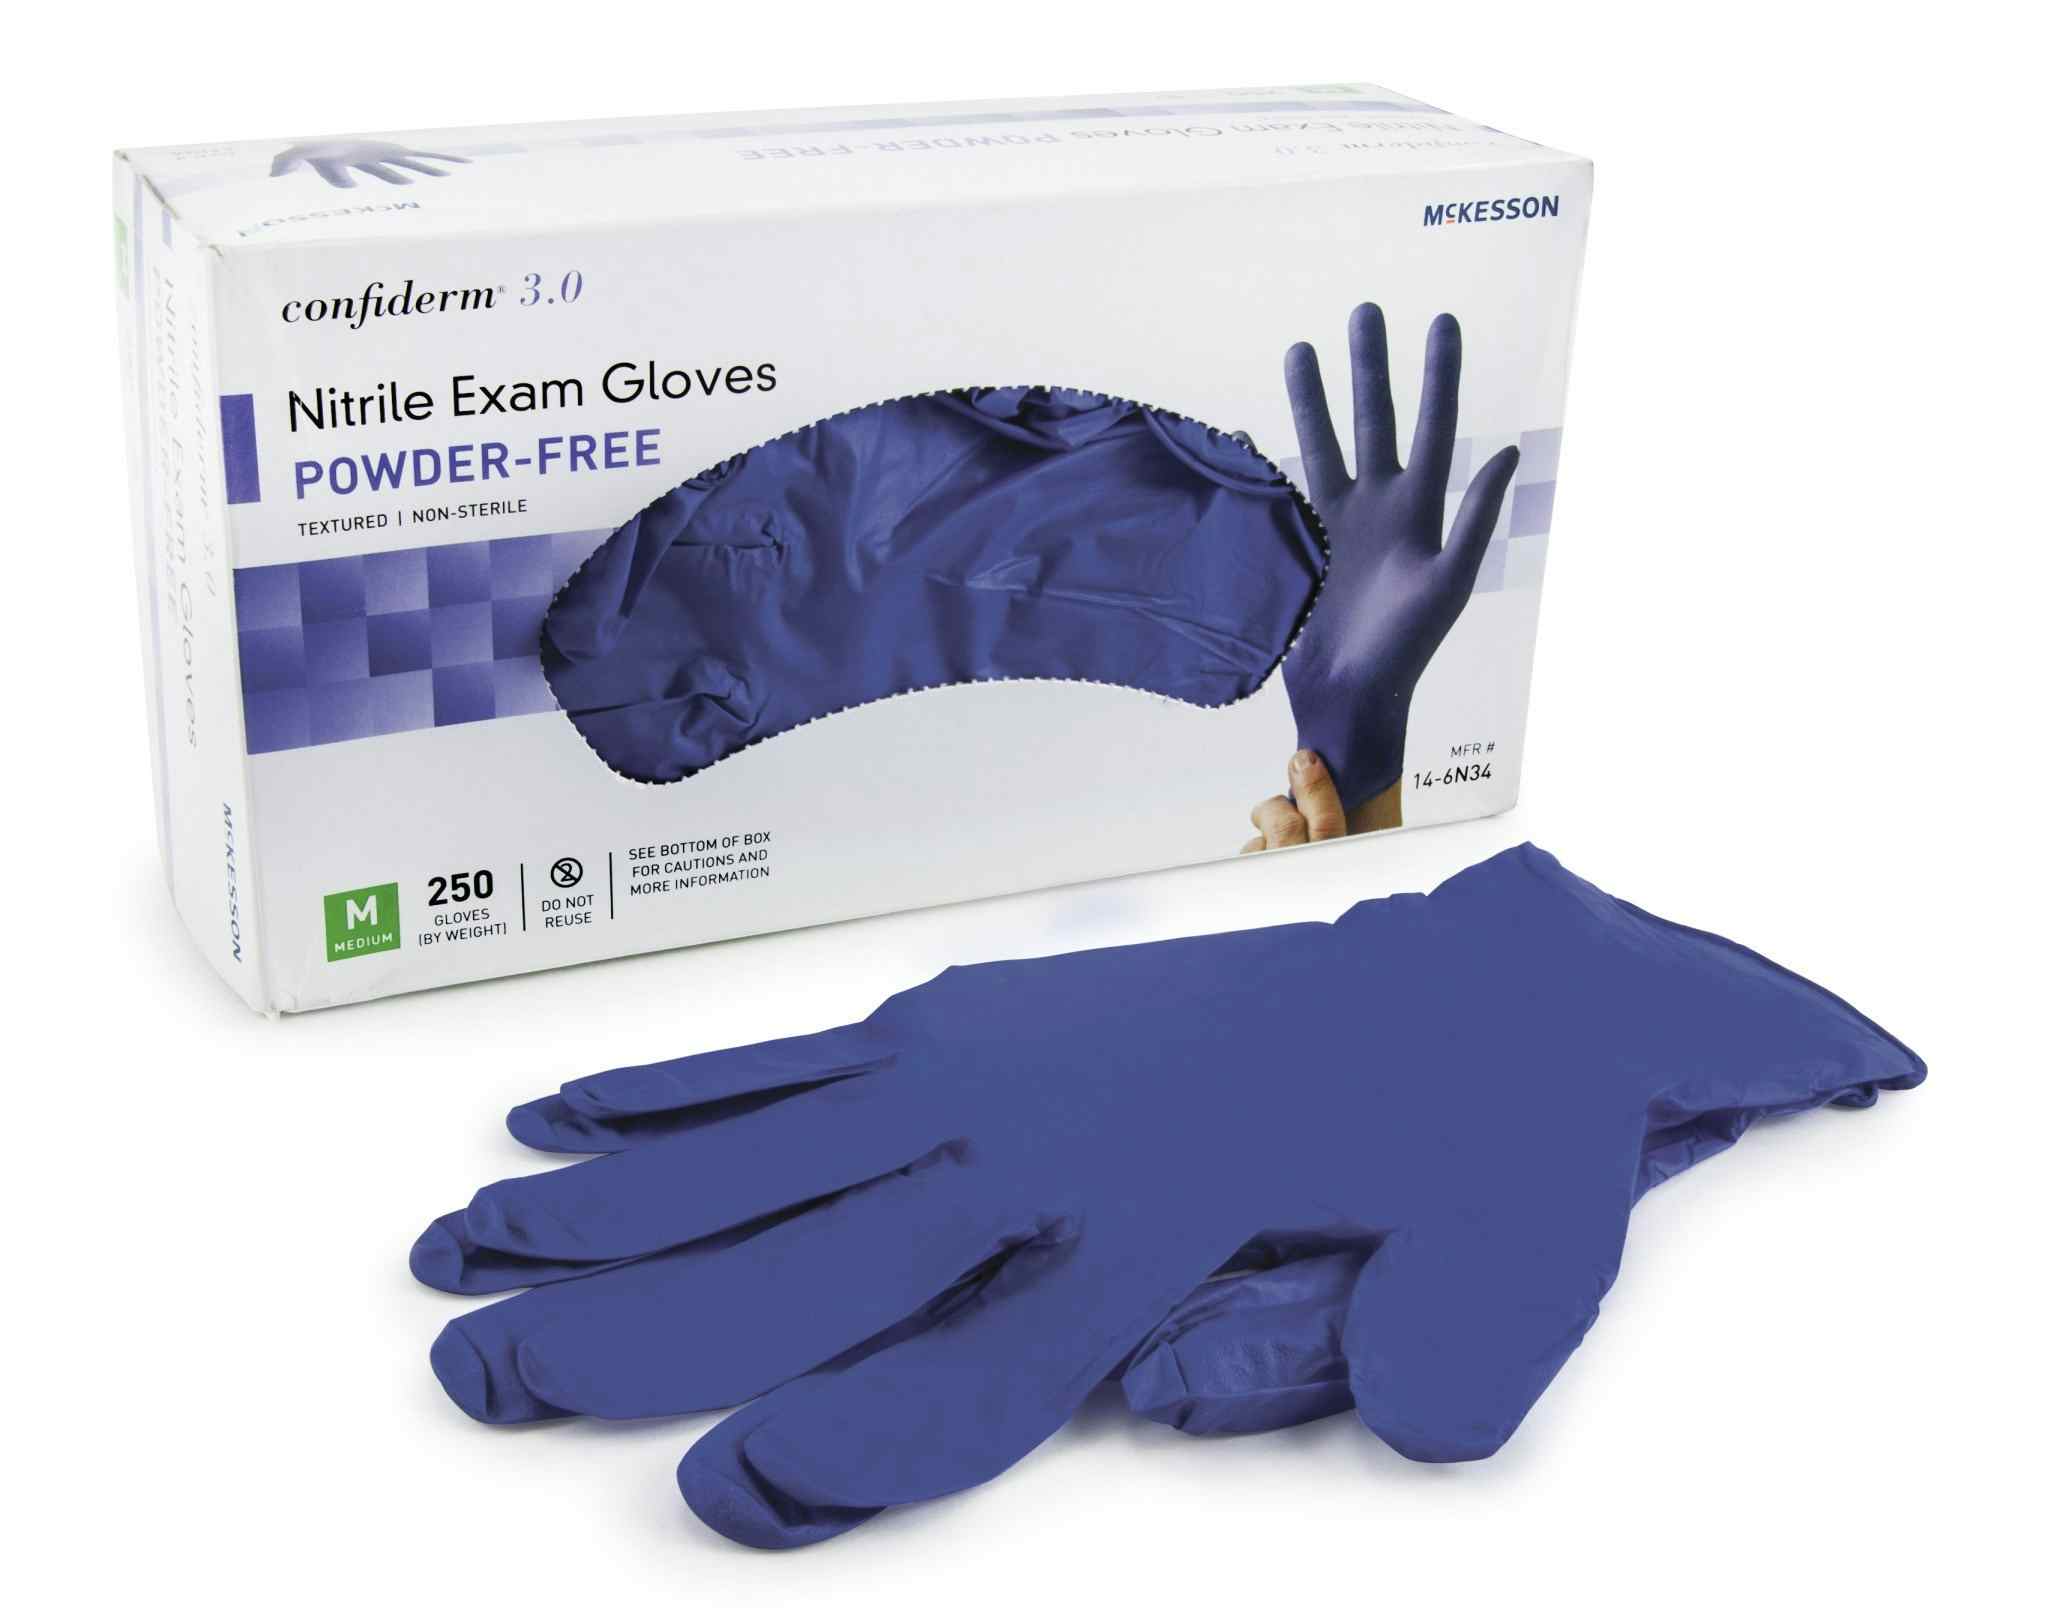 McKesson Confiderm 3.0 Powder-Free Nitrile Gloves, Blue